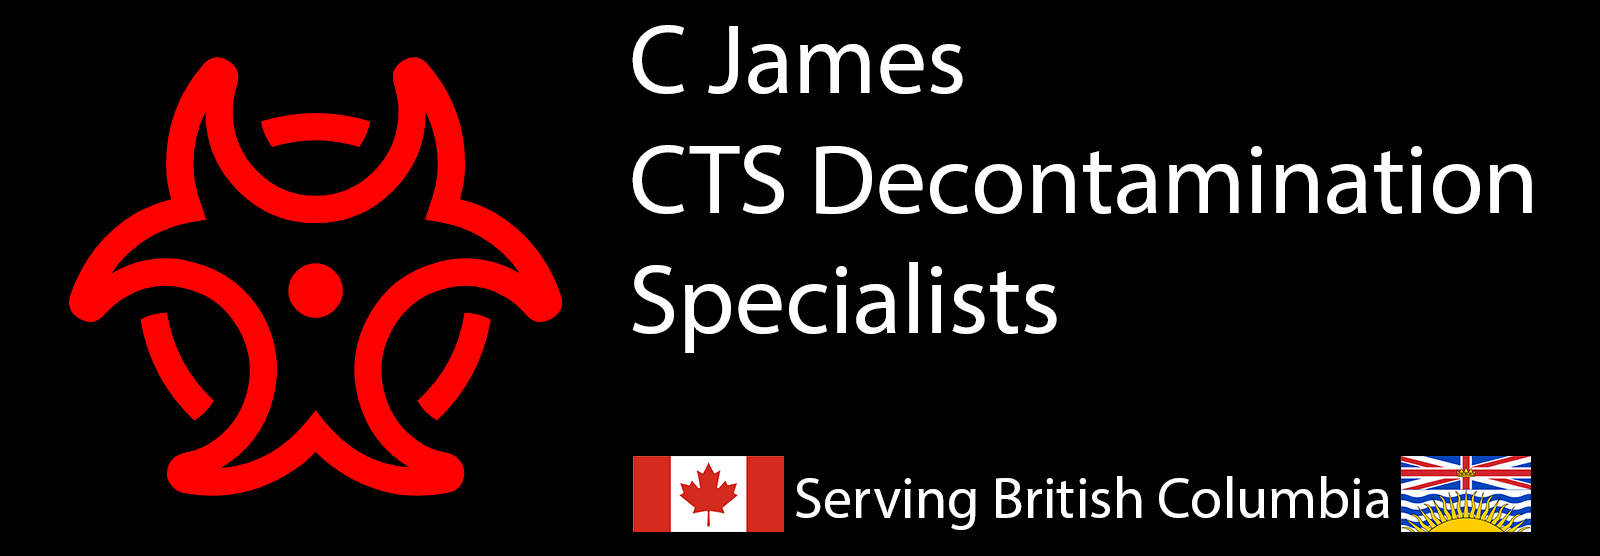 C James CTS Decontamination Specialists | Serving British Columbia